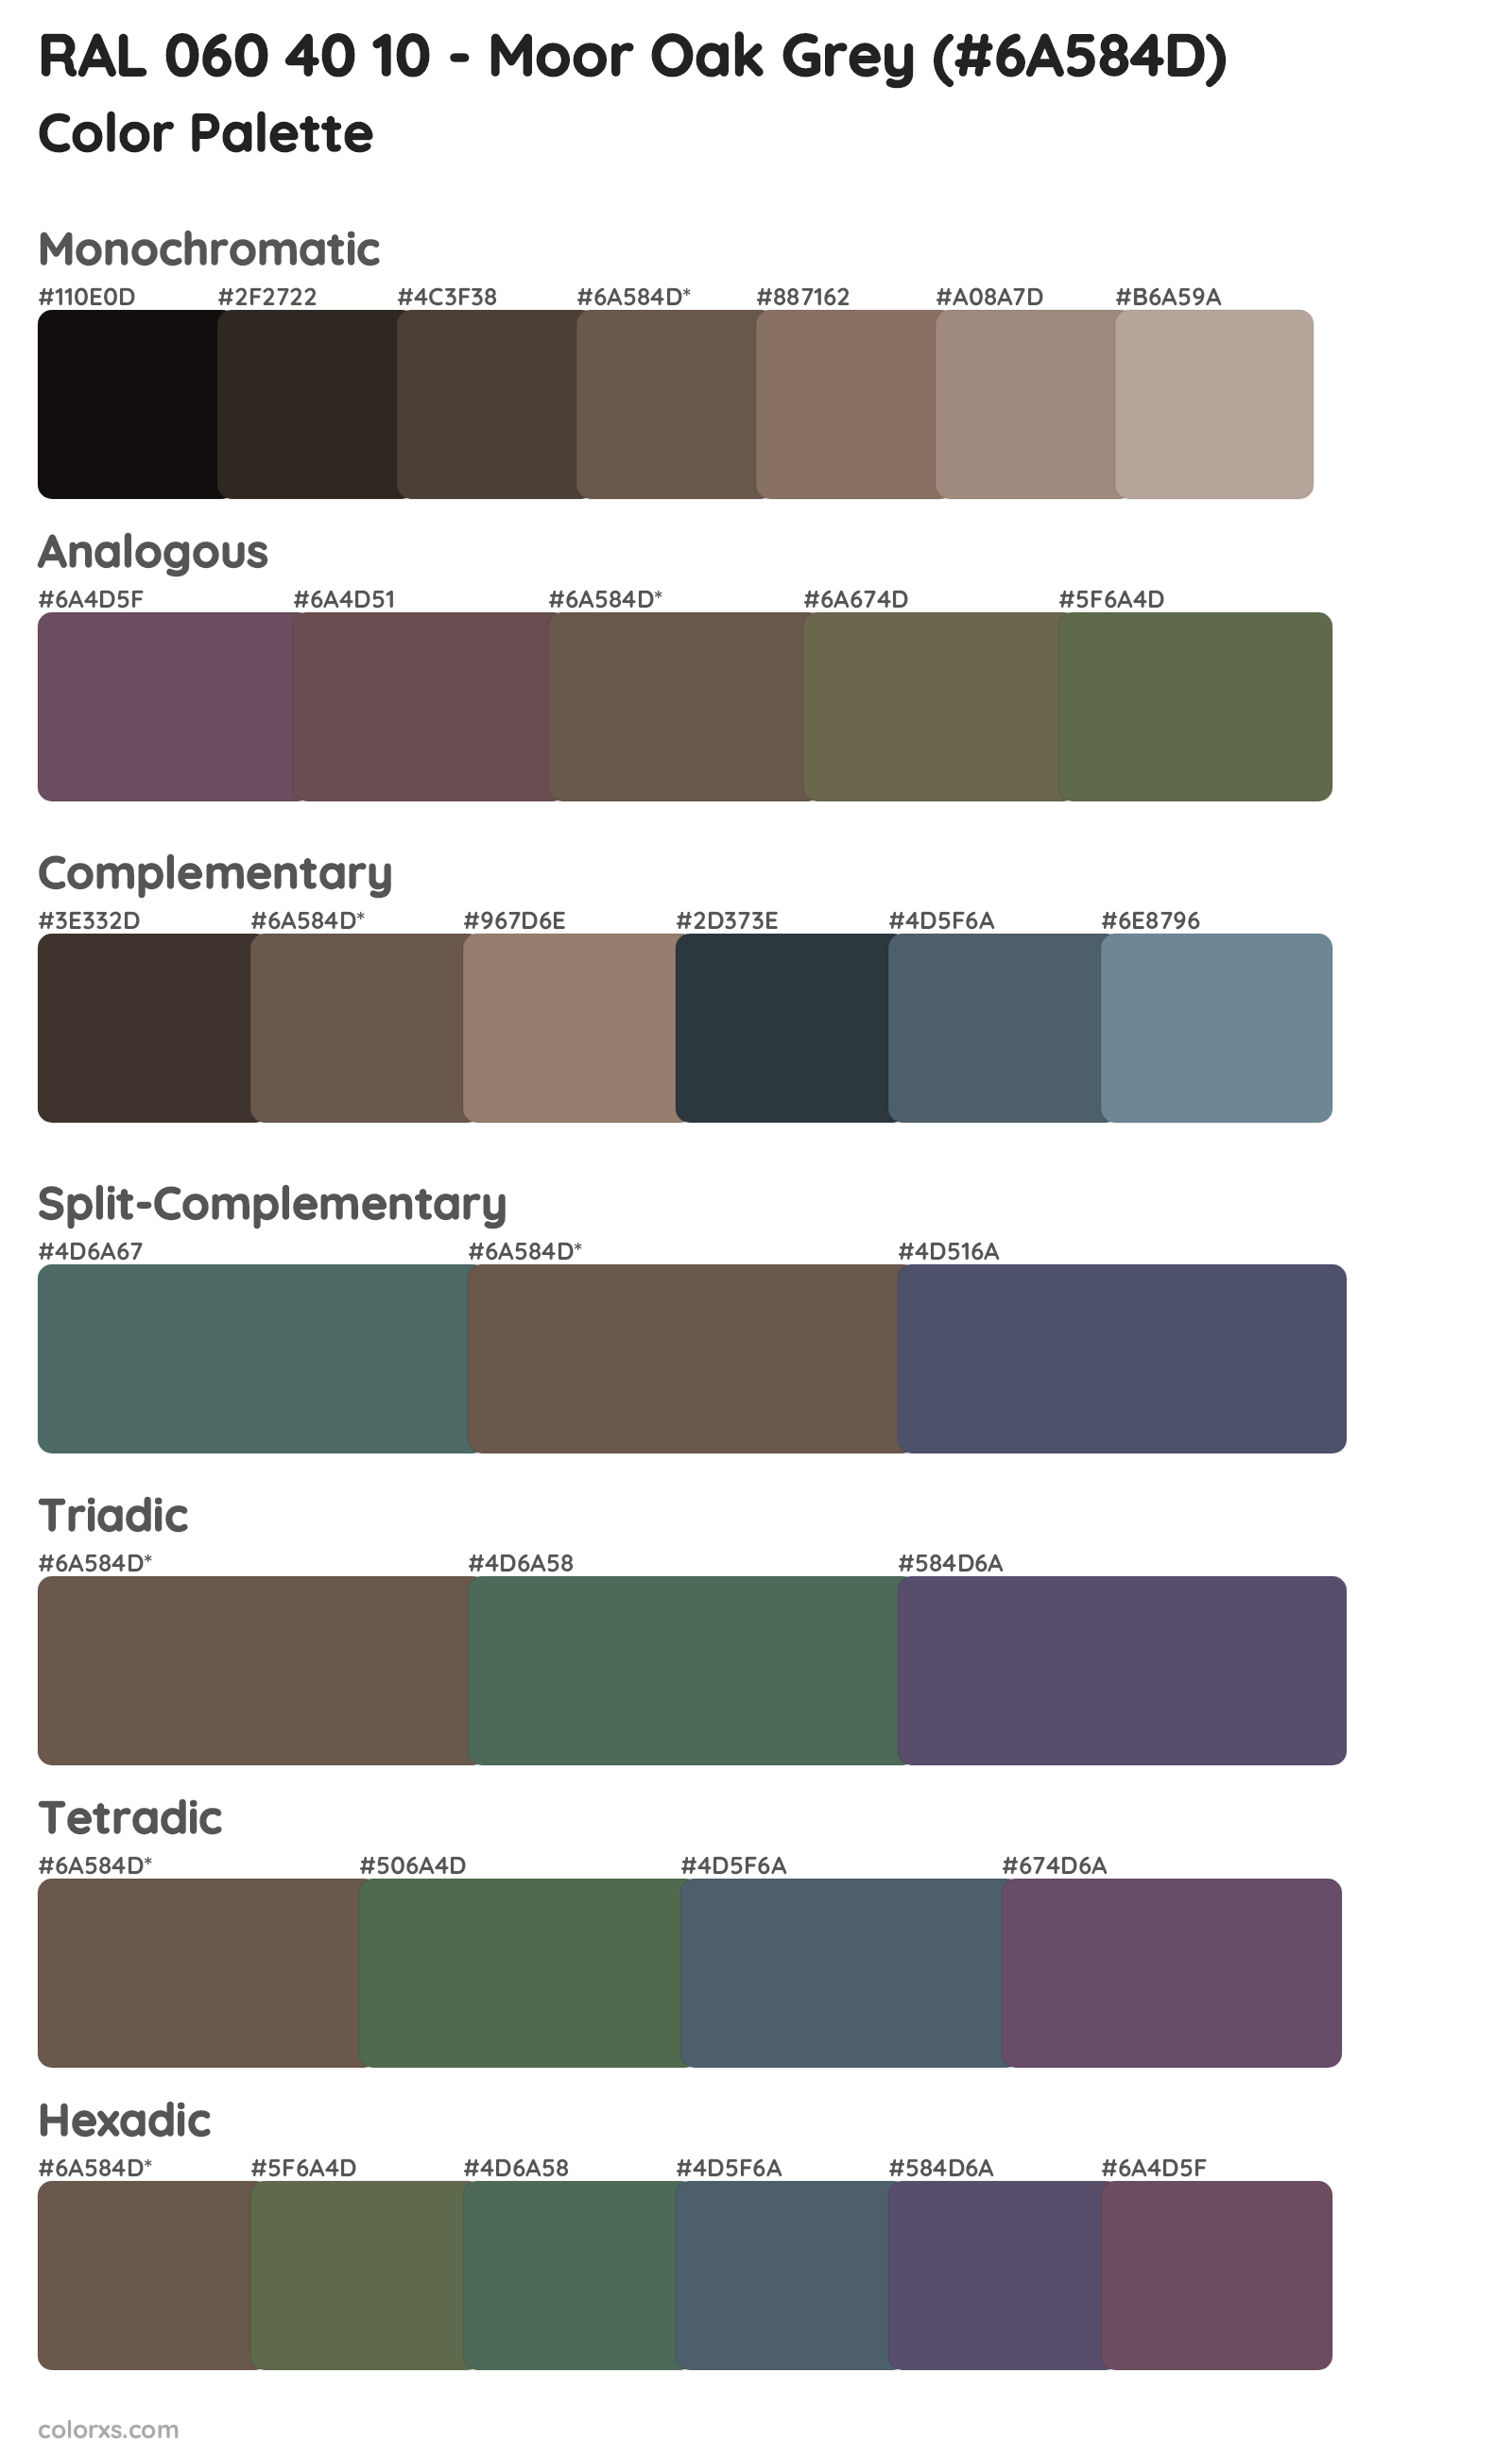 RAL 060 40 10 - Moor Oak Grey Color Scheme Palettes